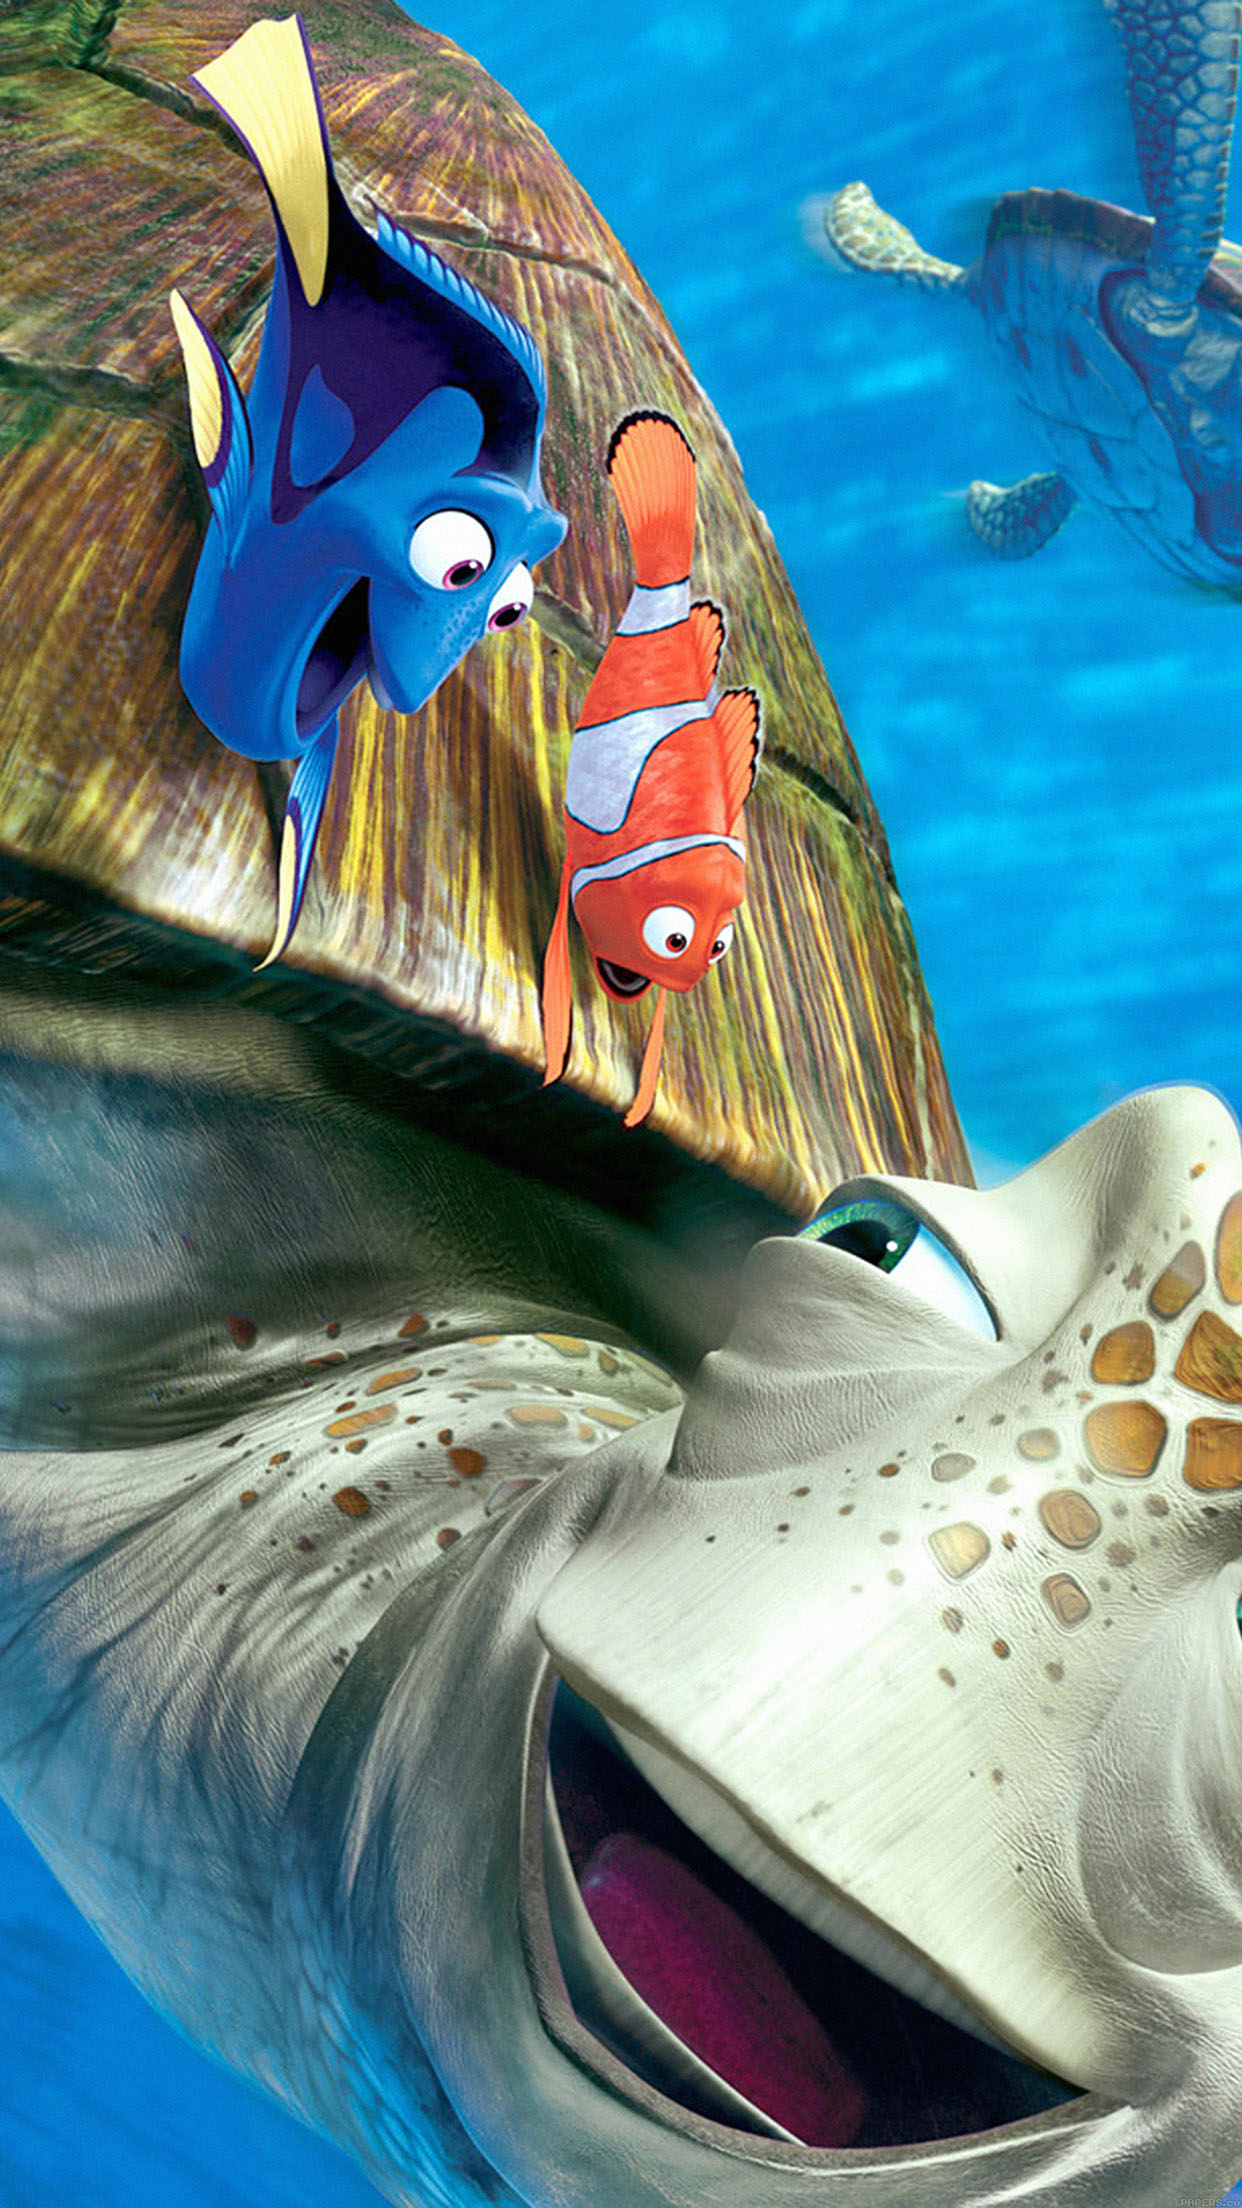 disney pixar wallpaper,illustration,dolphin,cg artwork,fictional character